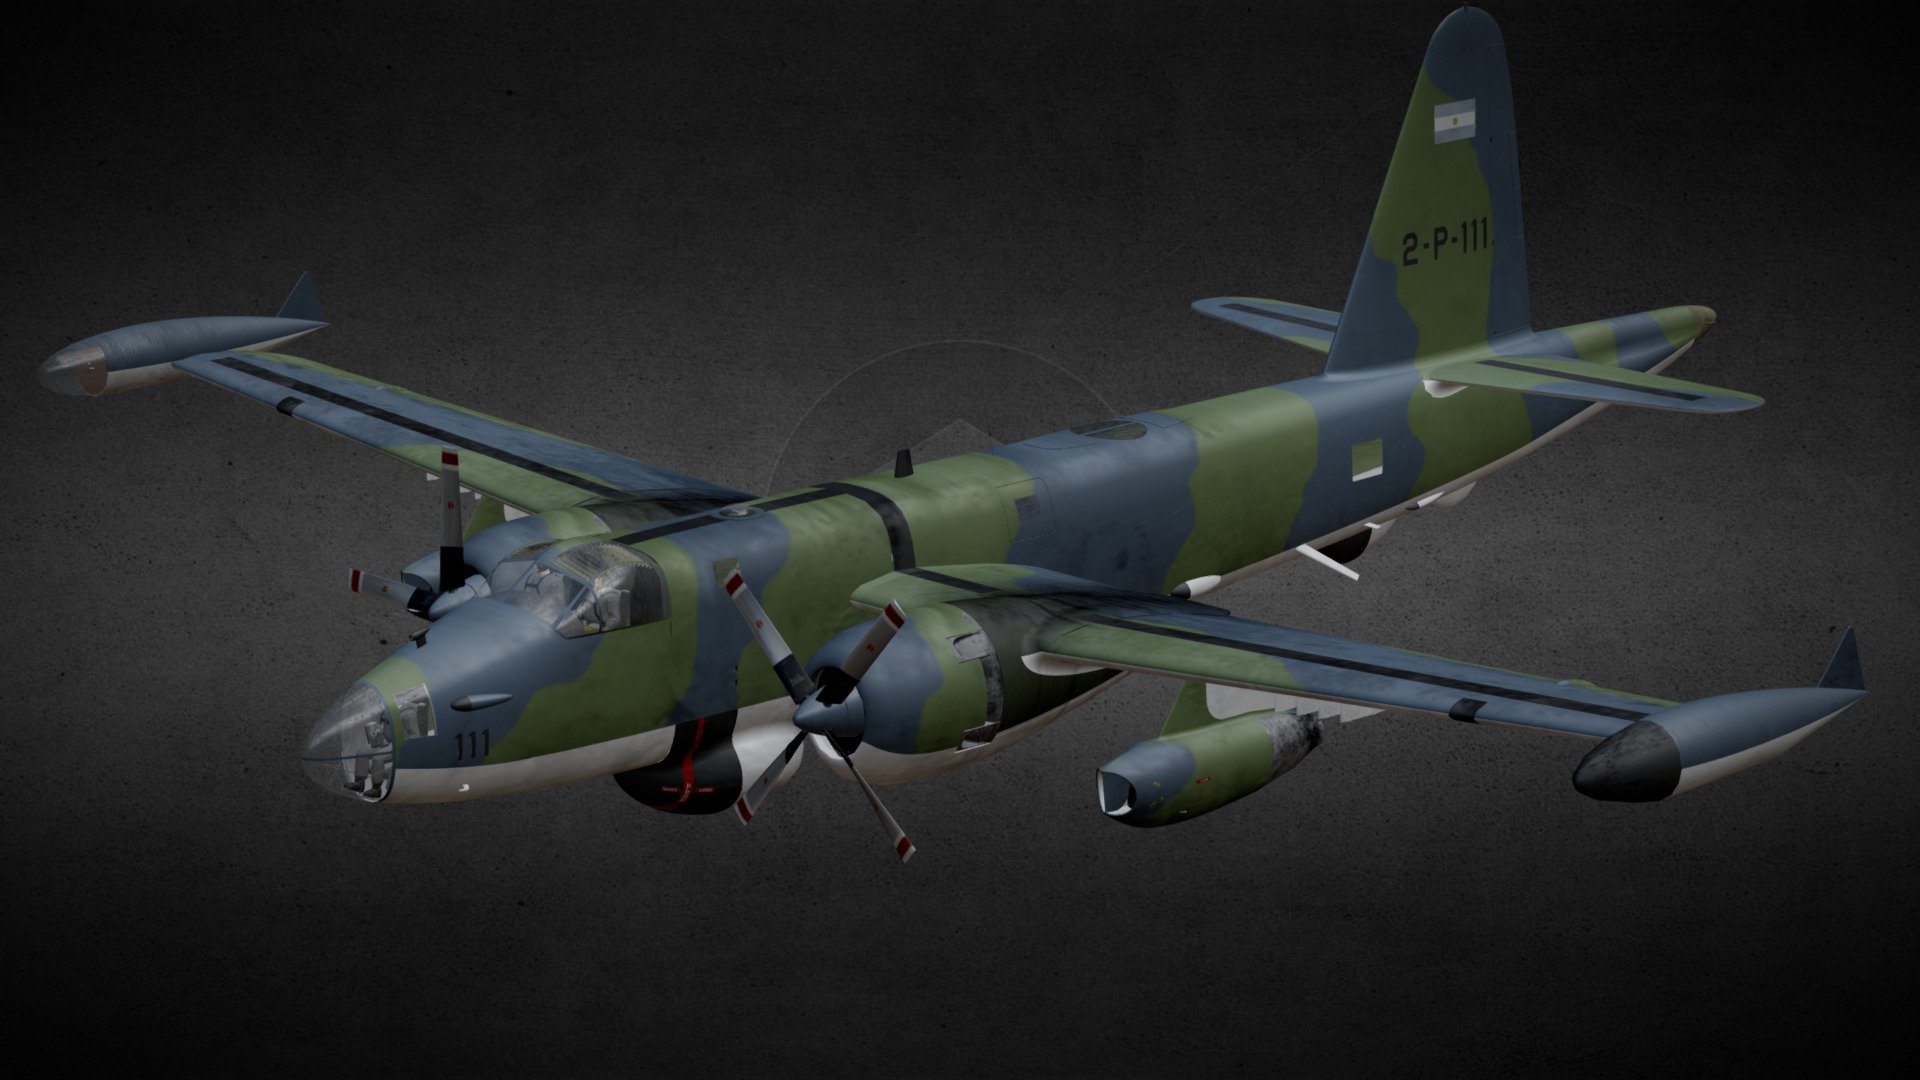 3D Representation of the Lockheed P-2 Neptune 2-P-111 of the &ldquo;Naval Air Squadron Exploration